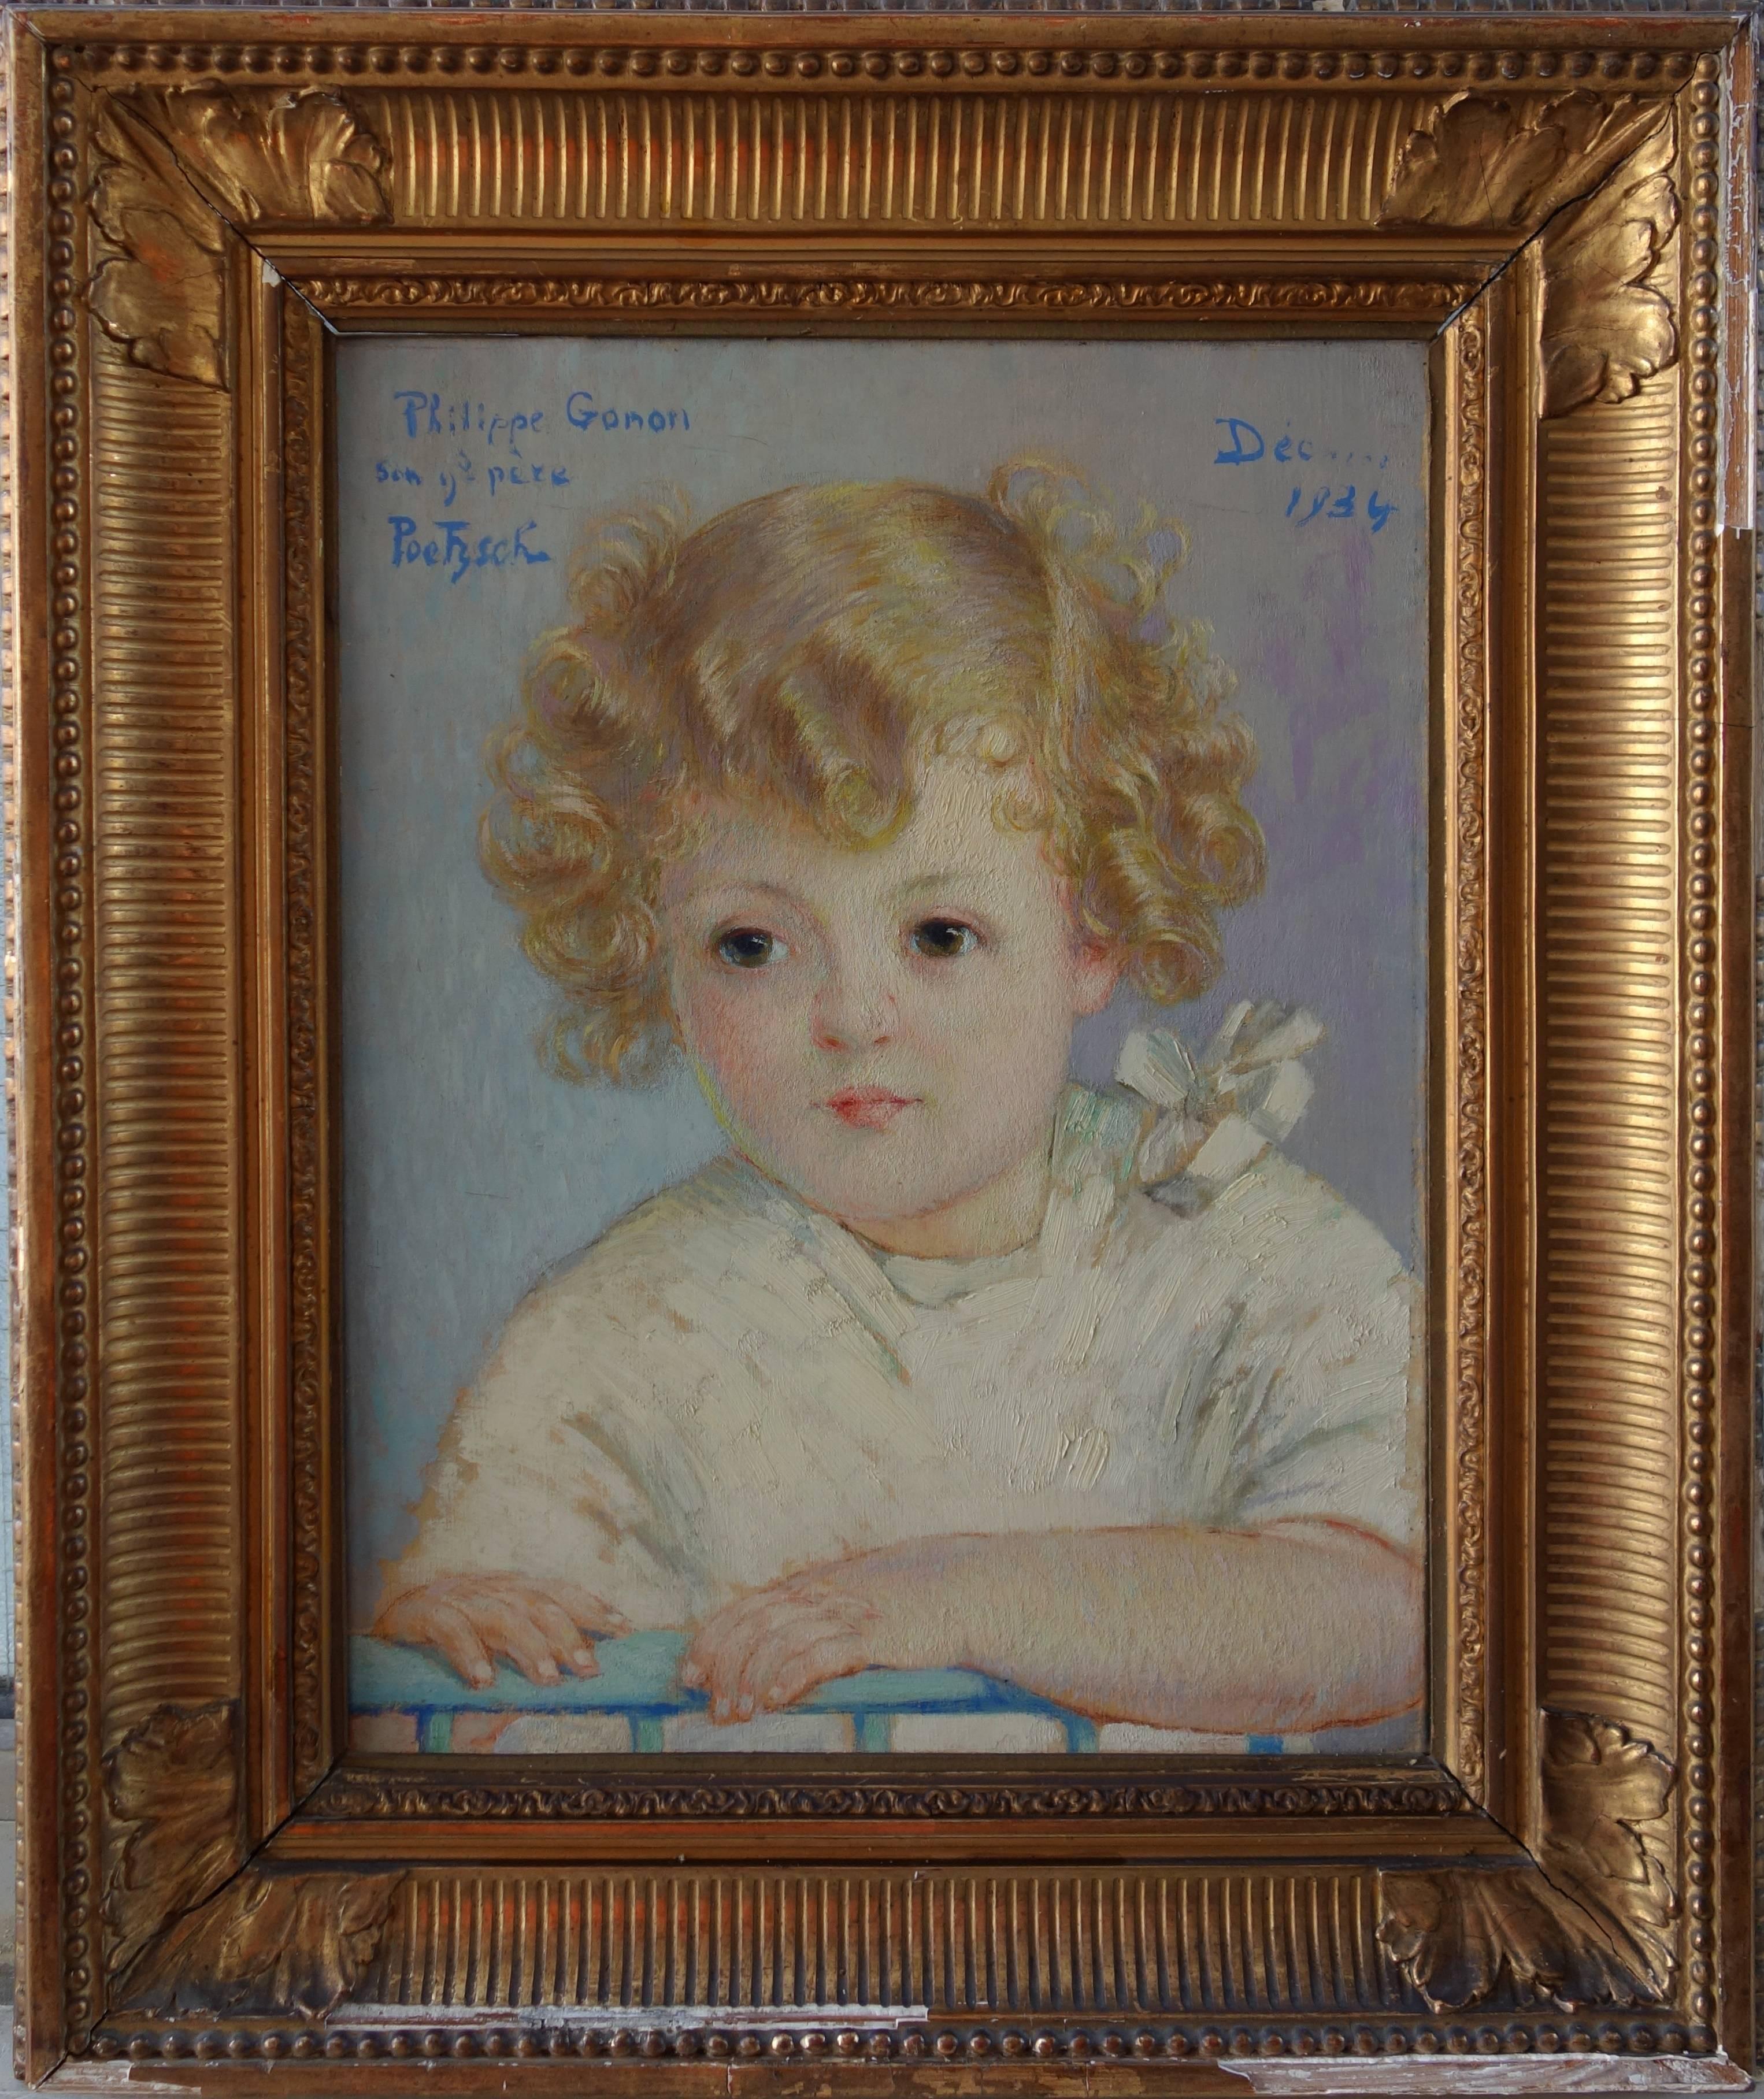 Blond Hair Boy - Original signed oil on canvas - 1934